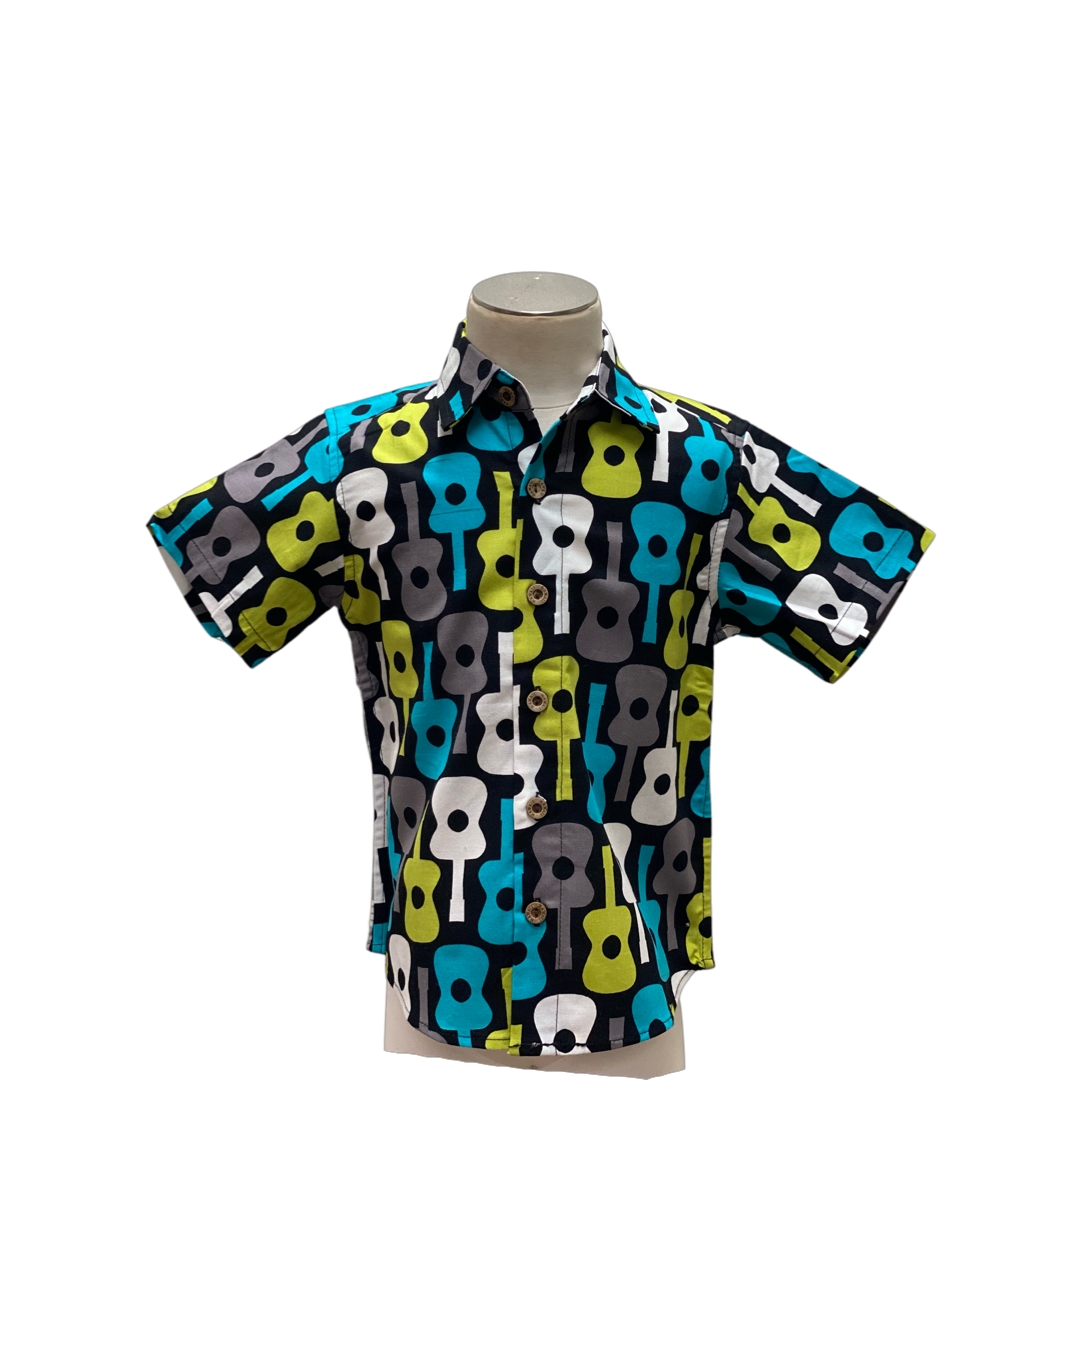 Coradorables BOYS UKULELE/PALAKA S/S "Kalani" Aloha Shirt